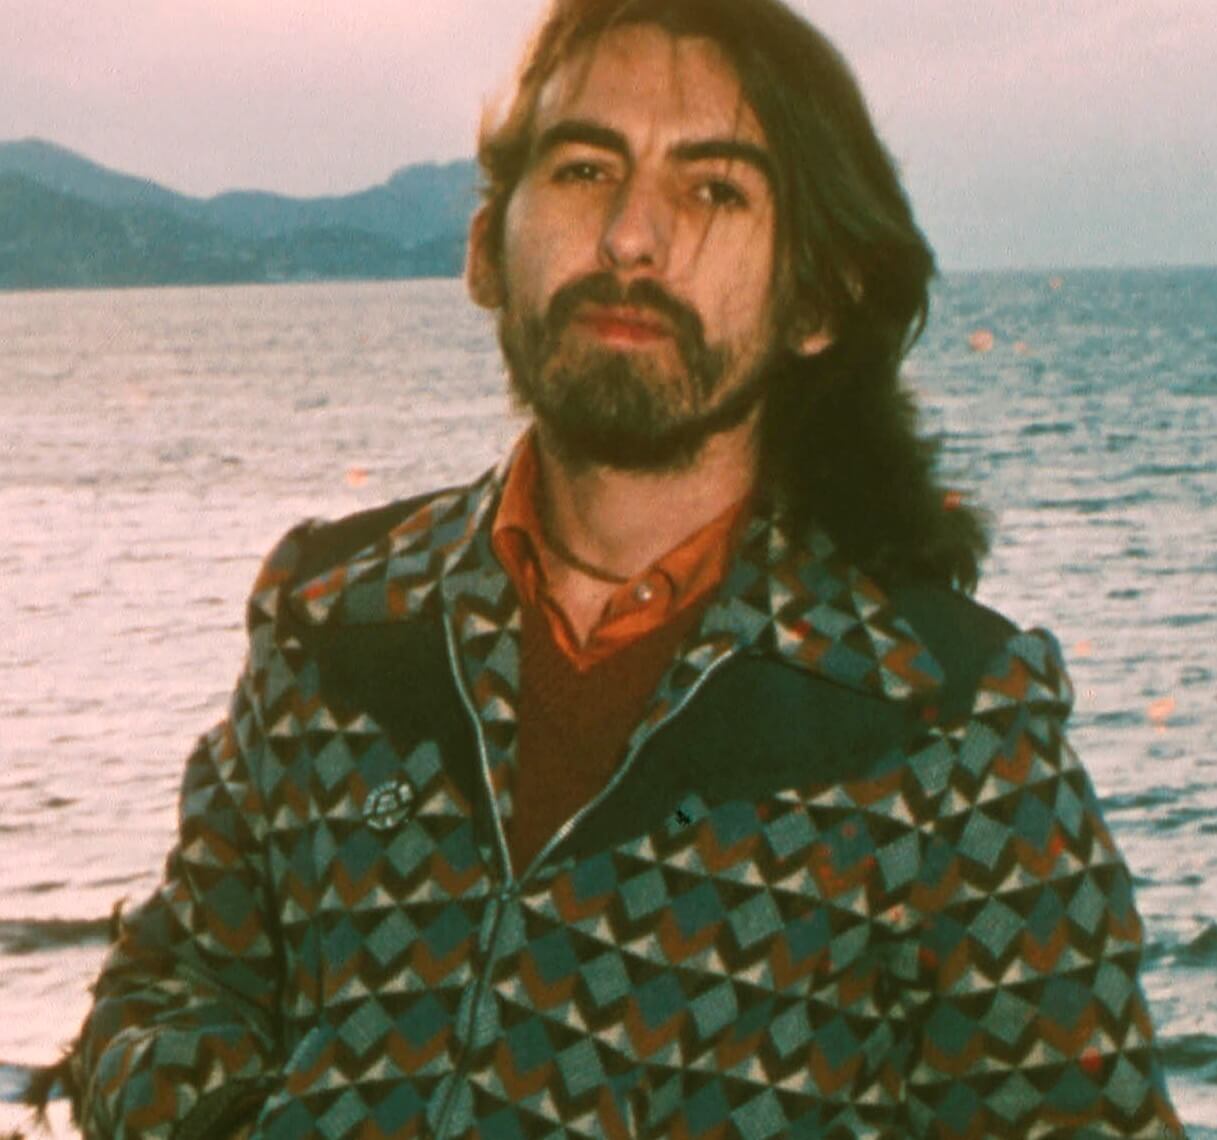 George Harrison near the water